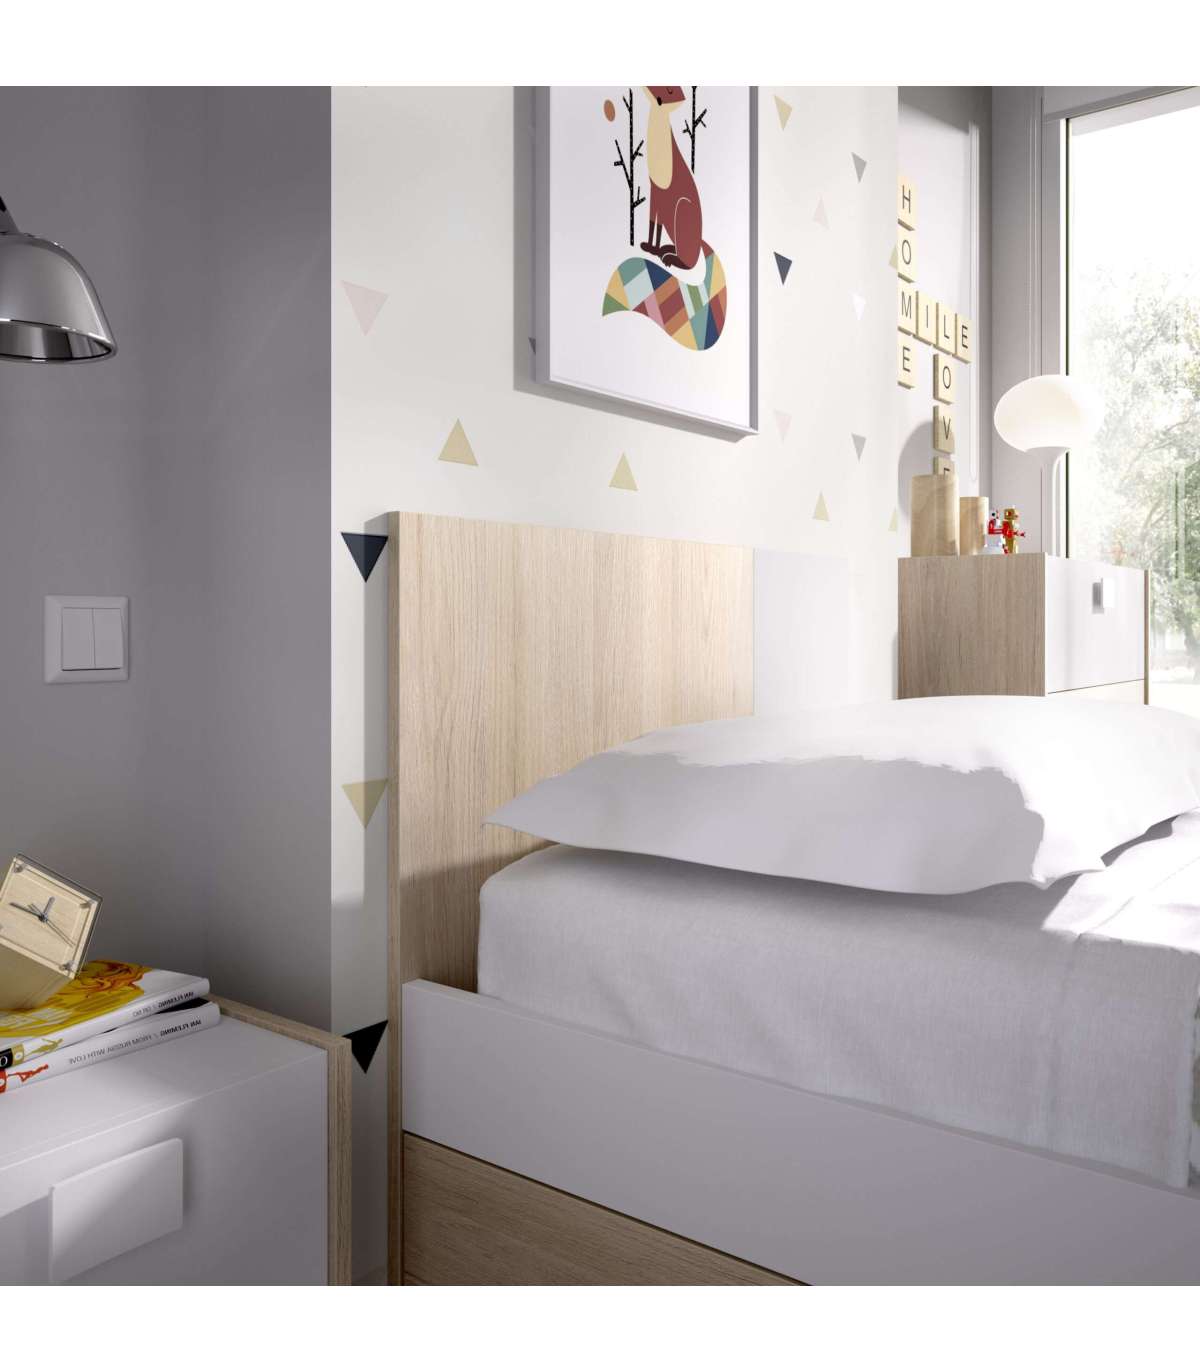 DKIT Santisteban cama de 90 cm para quarto jovem.